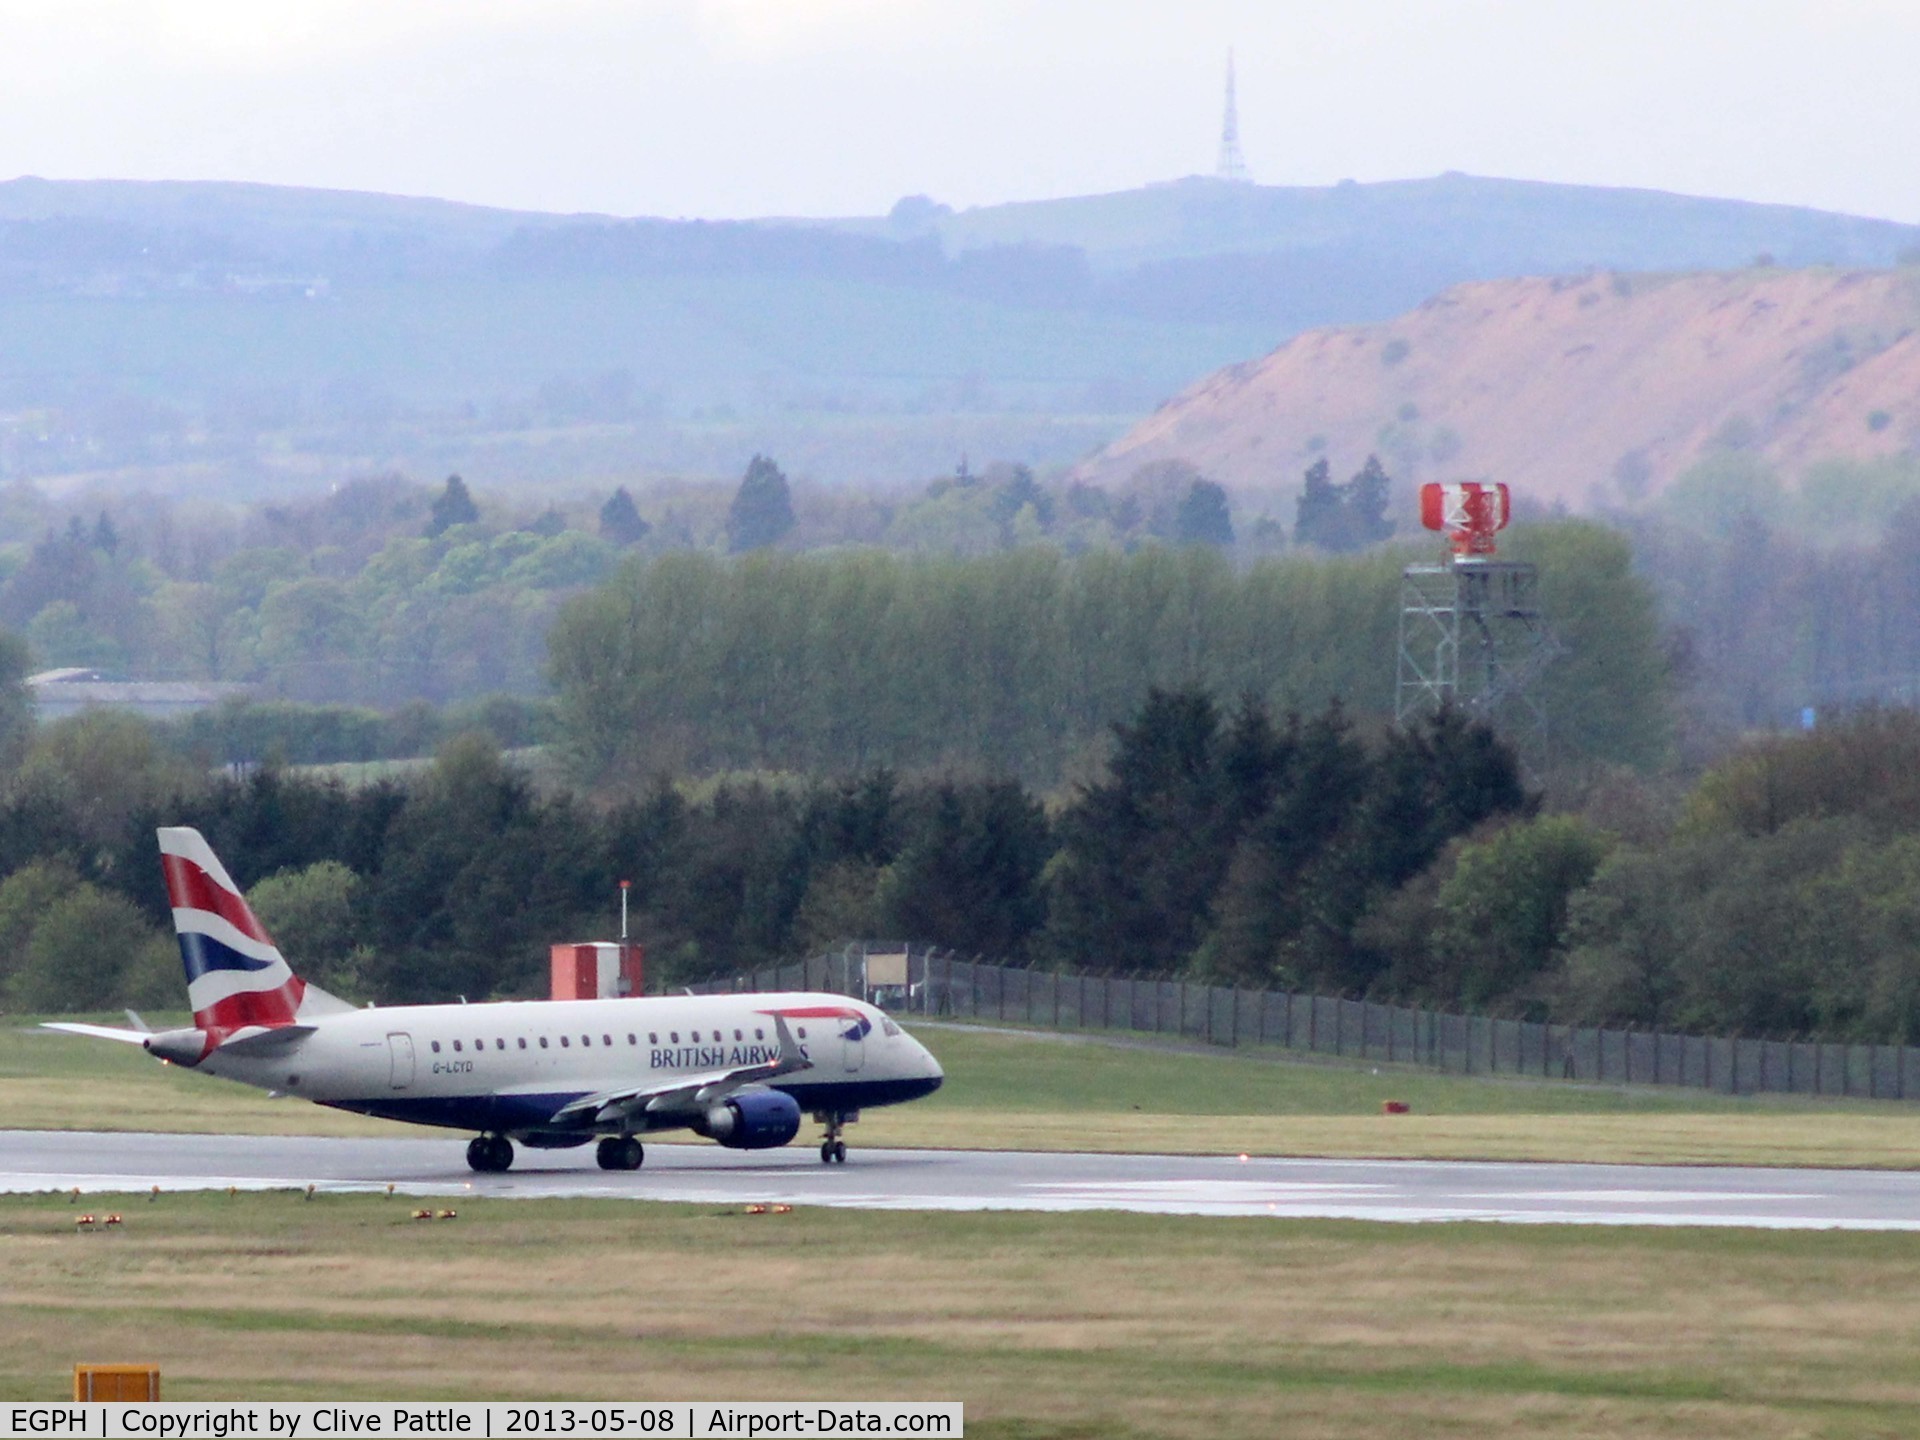 Edinburgh Airport, Edinburgh, Scotland United Kingdom (EGPH) - Speedbird waits for departure from Edinburgh